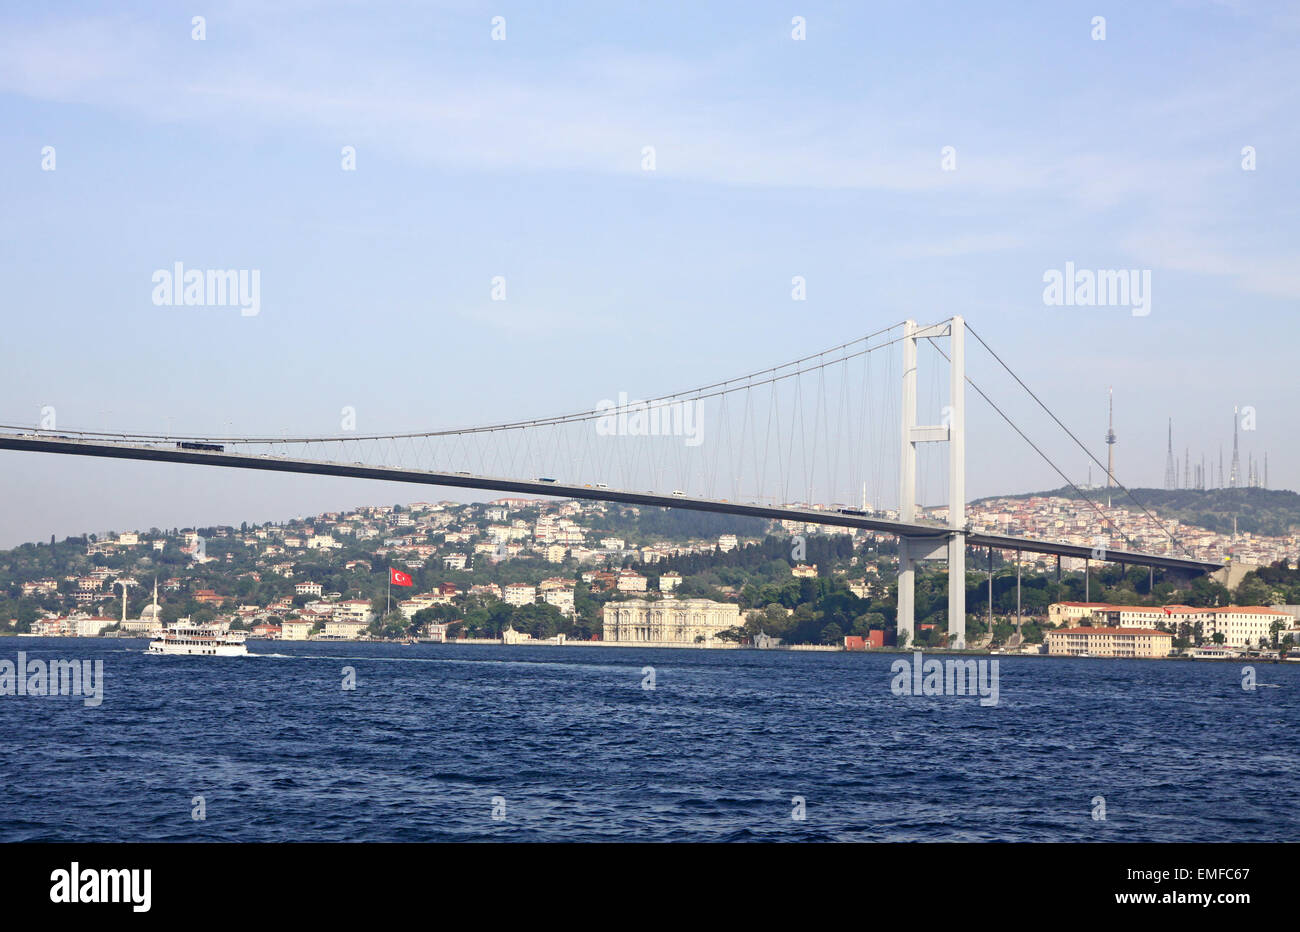 Bosphorus Bridge (also called the First Bosphorus Bridge) over the Bosphorus strait in Istanbul, Turkey Stock Photo